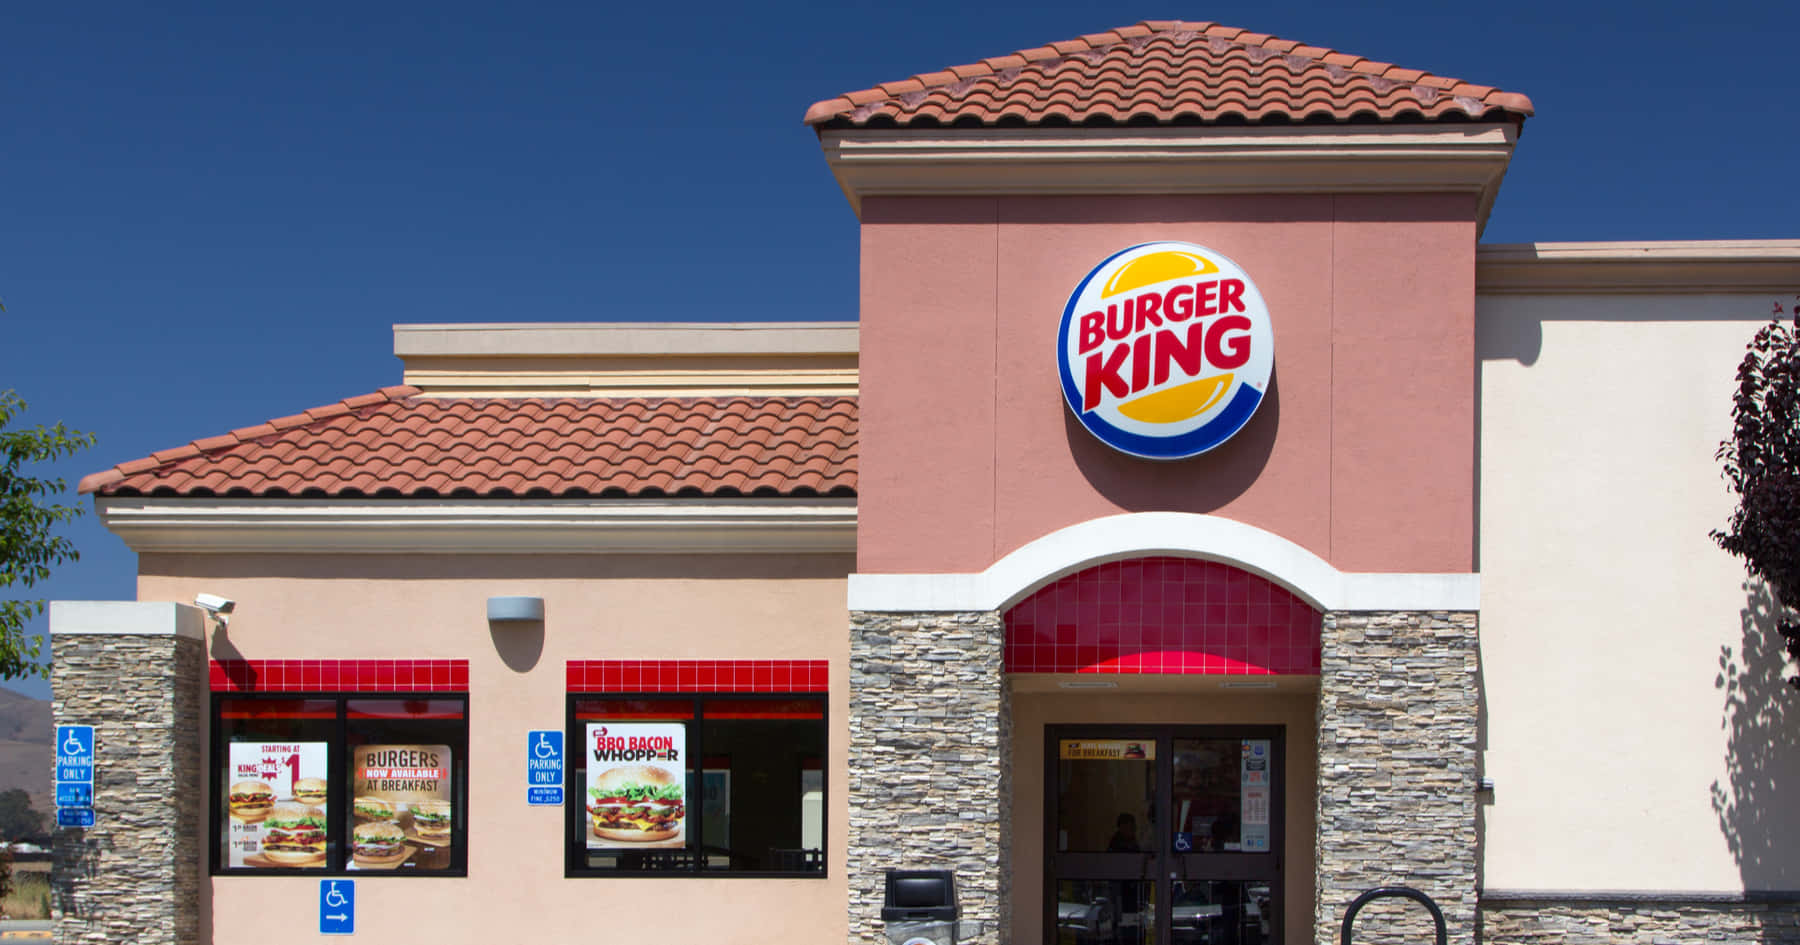 Burger King: Your Next Satisfying Meal